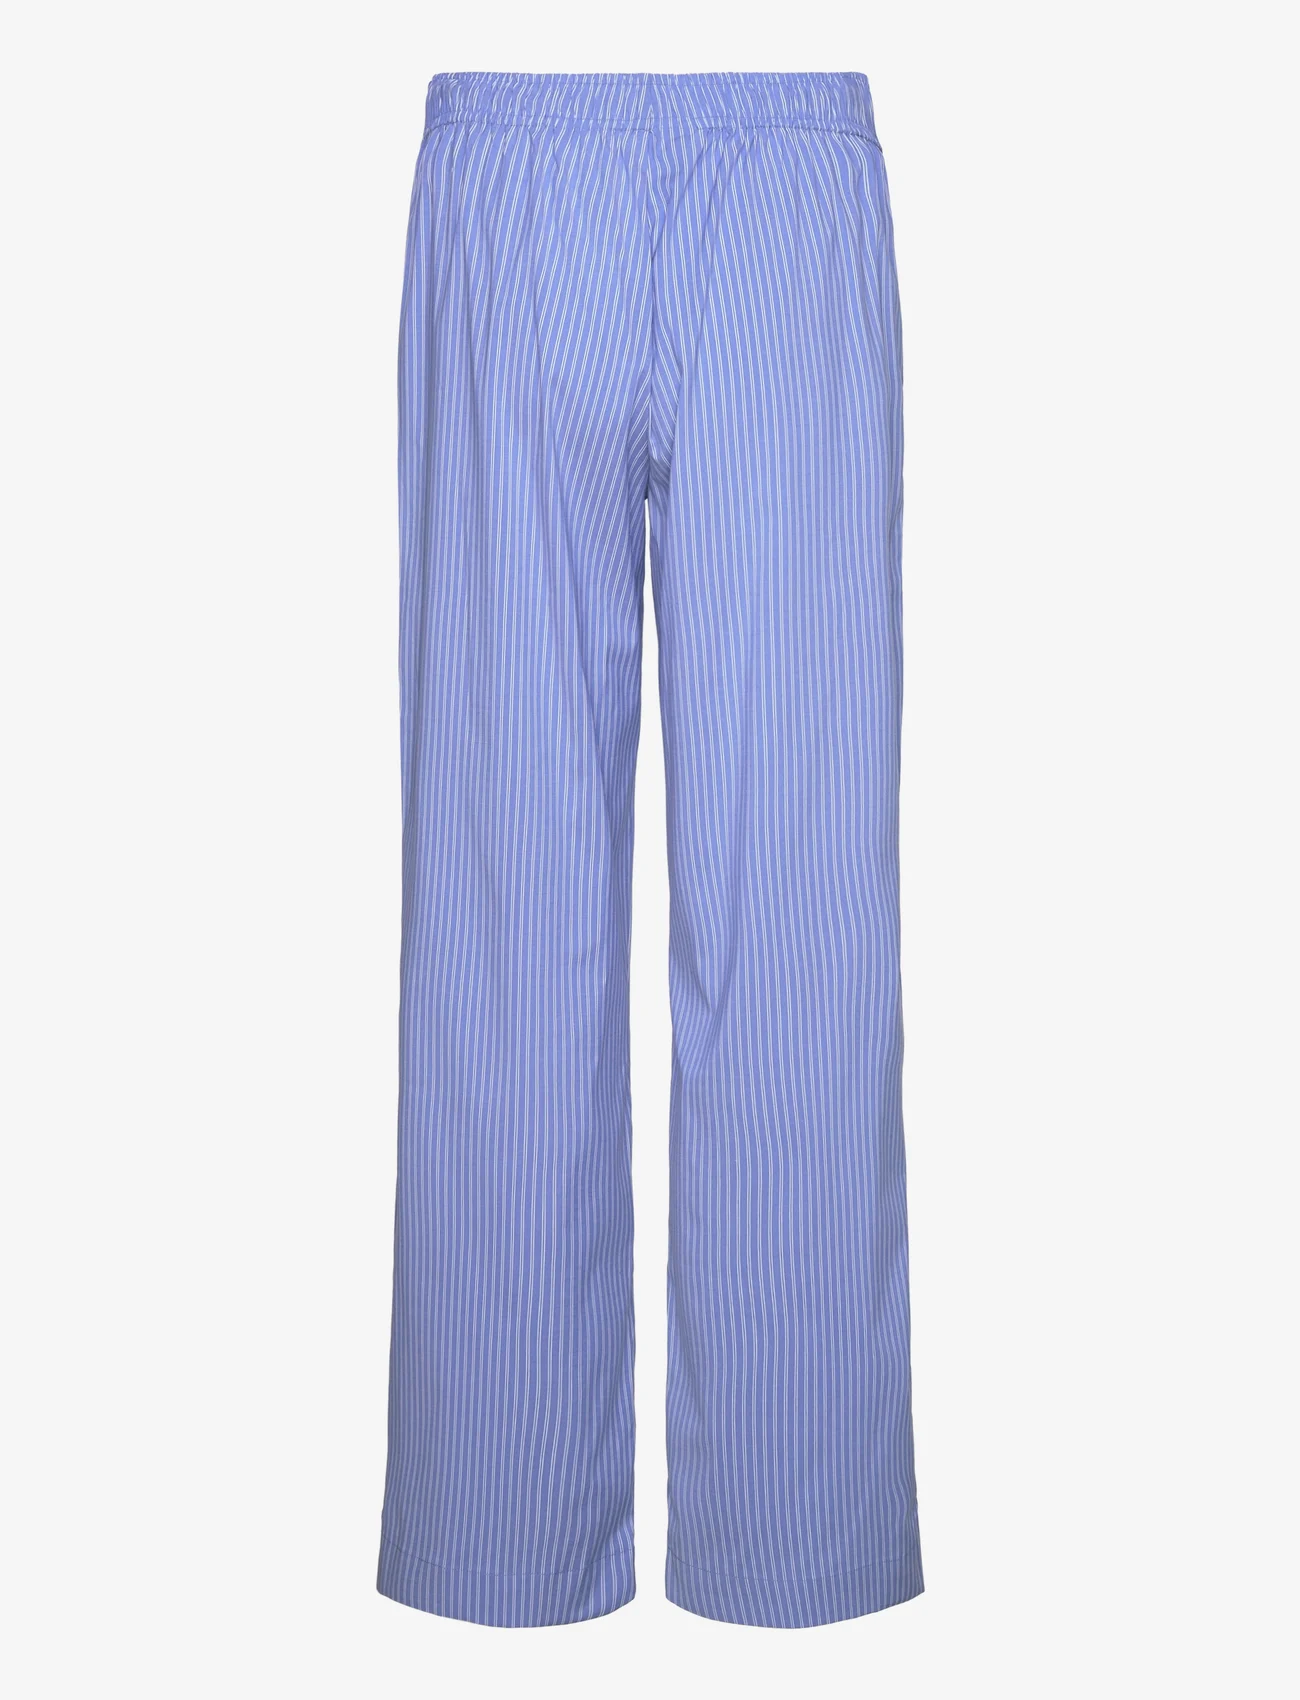 Sofie Schnoor - Trousers - bukser med brede ben - blue striped - 1